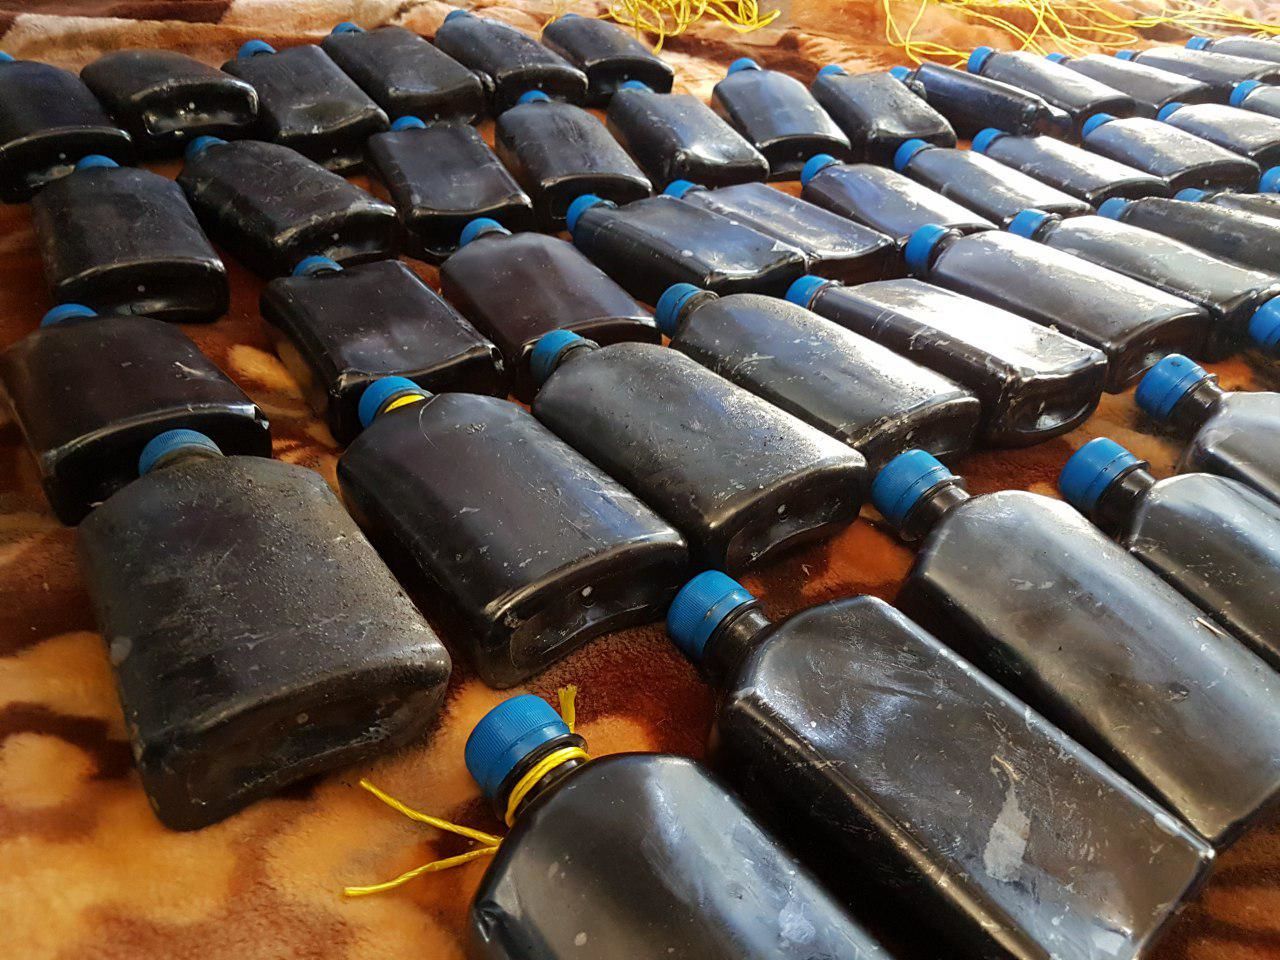 کشف 230 کیلوگرم مواد مخدر در آخر هفته خوزستان